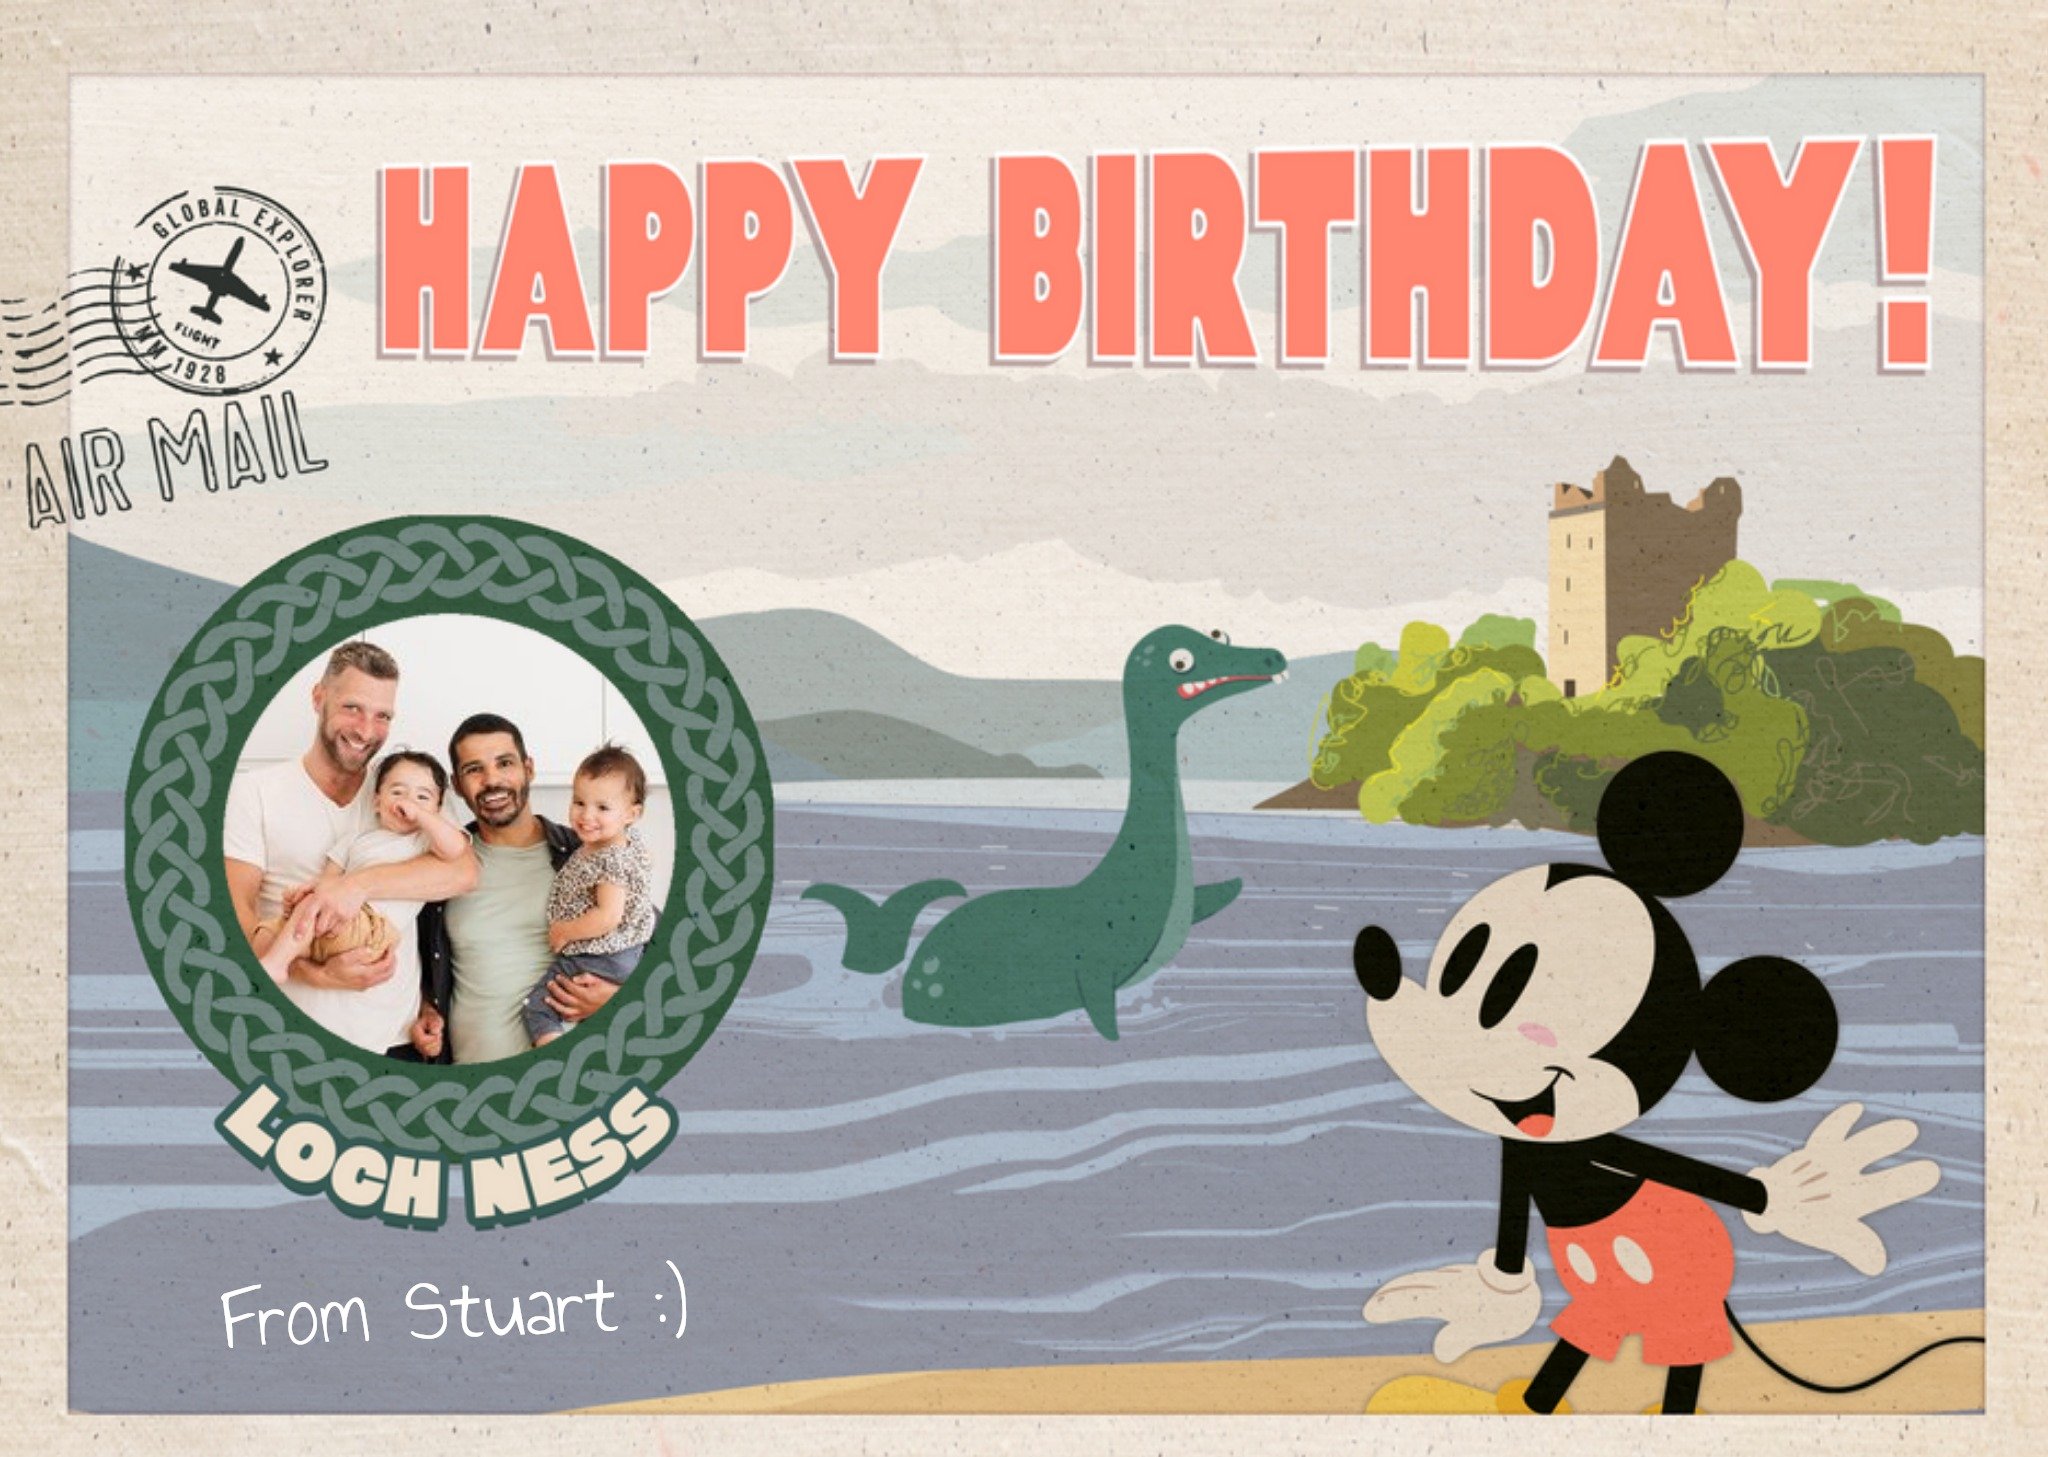 Mickey Mouse Loch Ness Monster Nessie Scotland Photo Upload Birthday Card By Disney Ecard